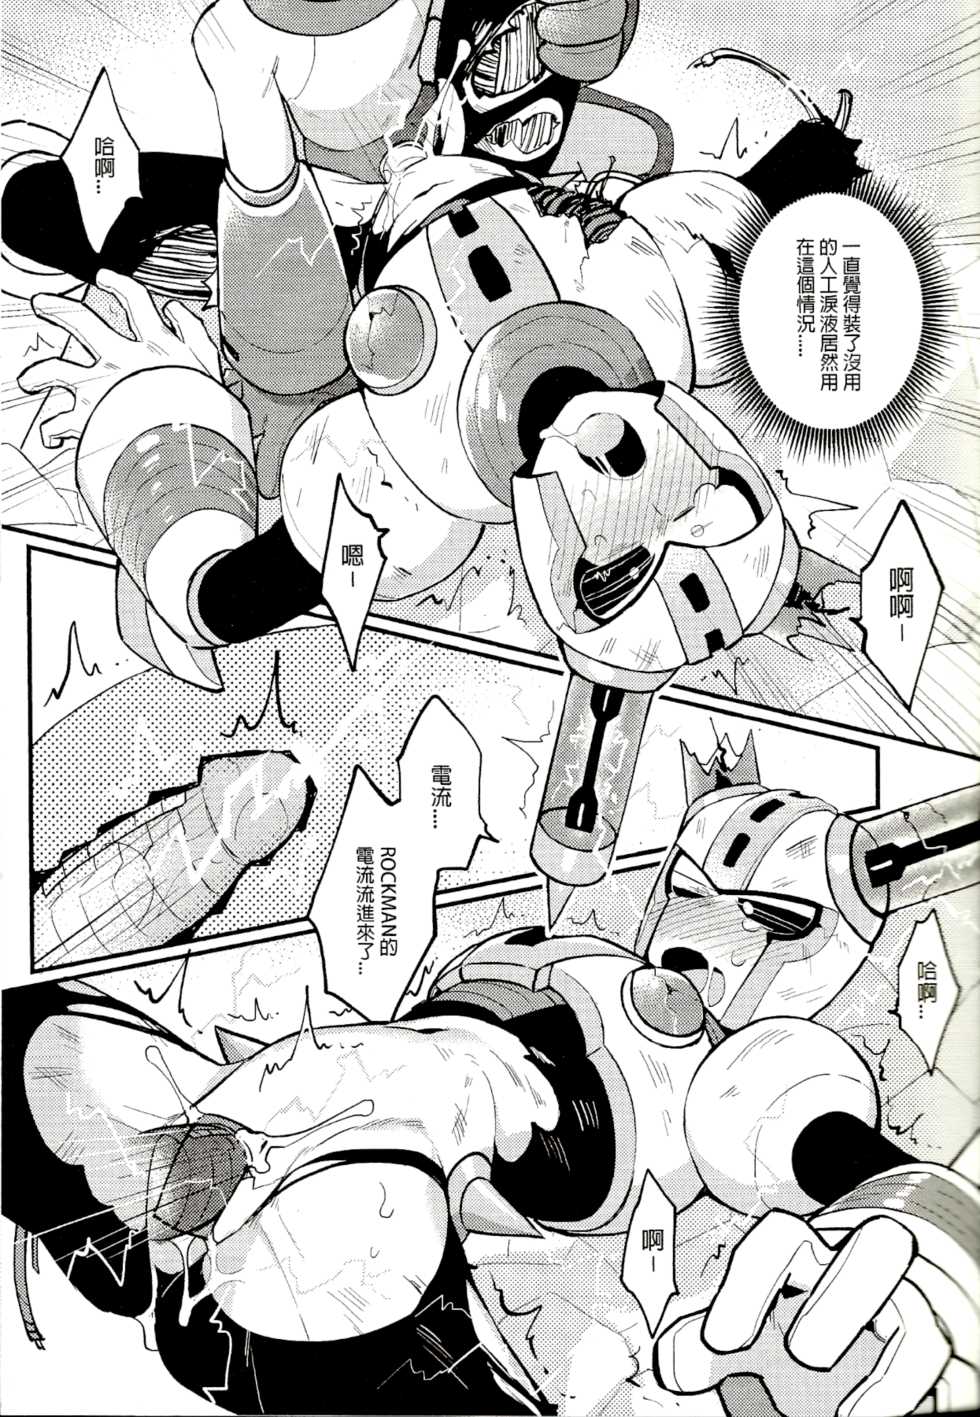 (Finish Prison) Luòkè rén 11-FUSEMAN gōnglüè běn | "Rockman 11-FUSEMAN Raiders" (Mega Man) - Page 14